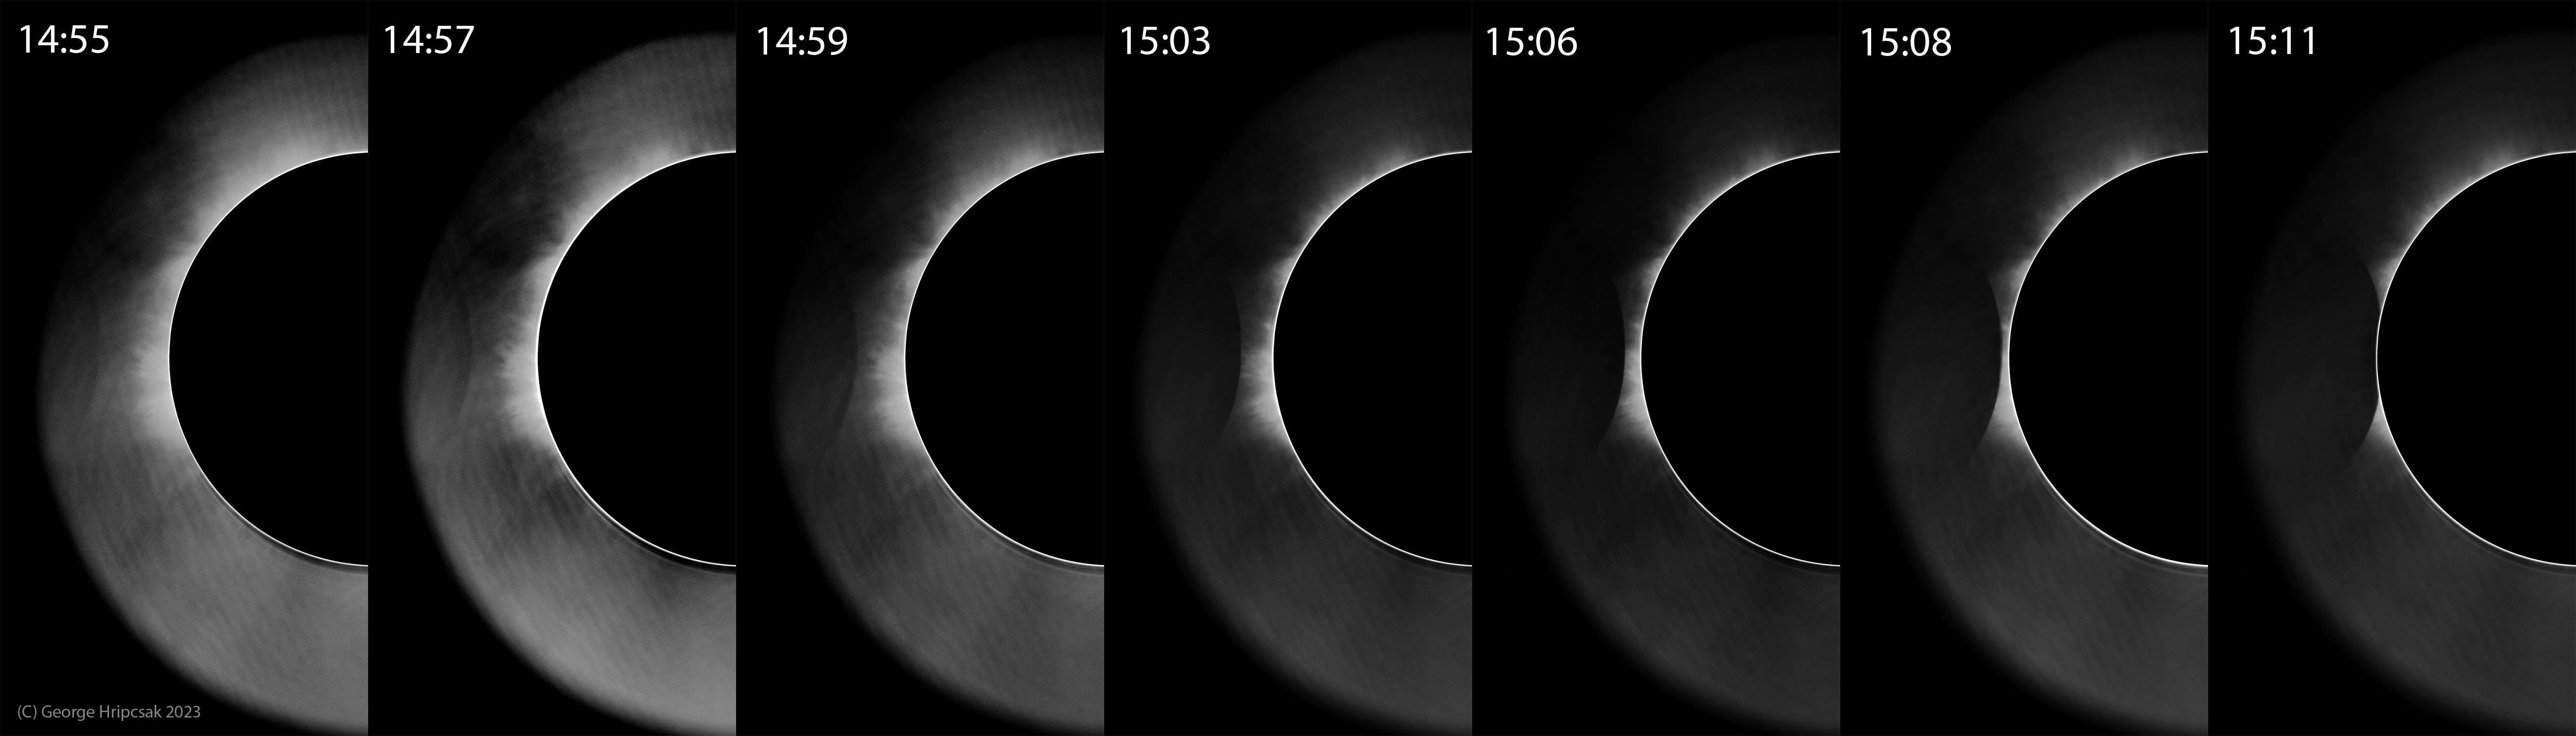 Hripcsak 2023-10-14 eclipse corona montage 5.jpg